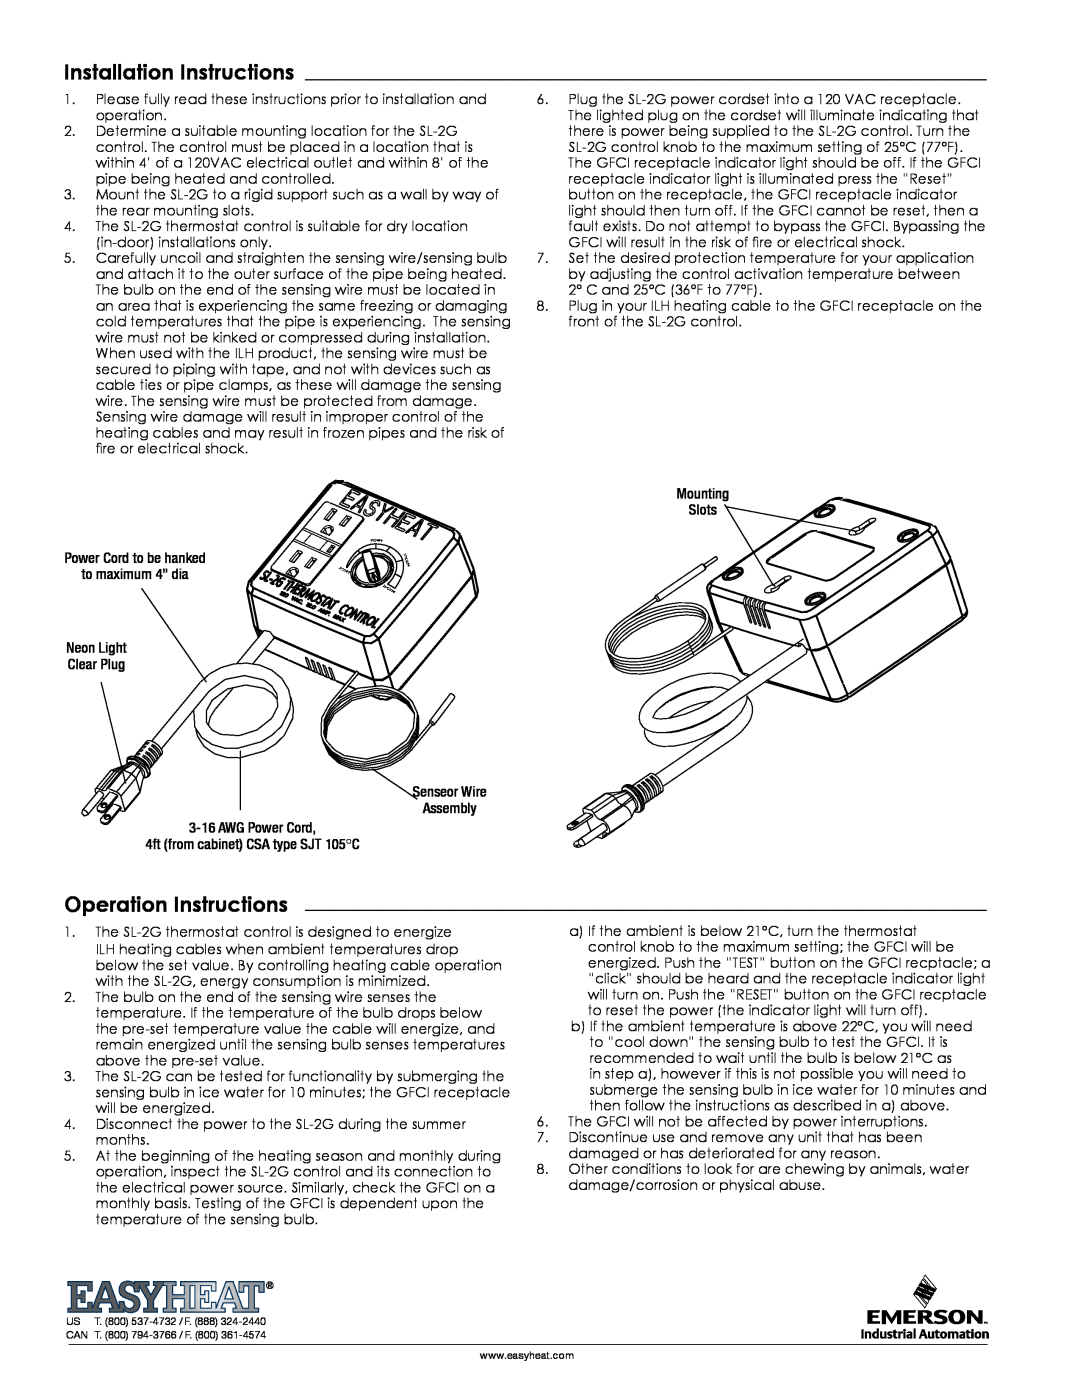 Emerson SL-2G warranty Installation Instructions, Operation Instructions 